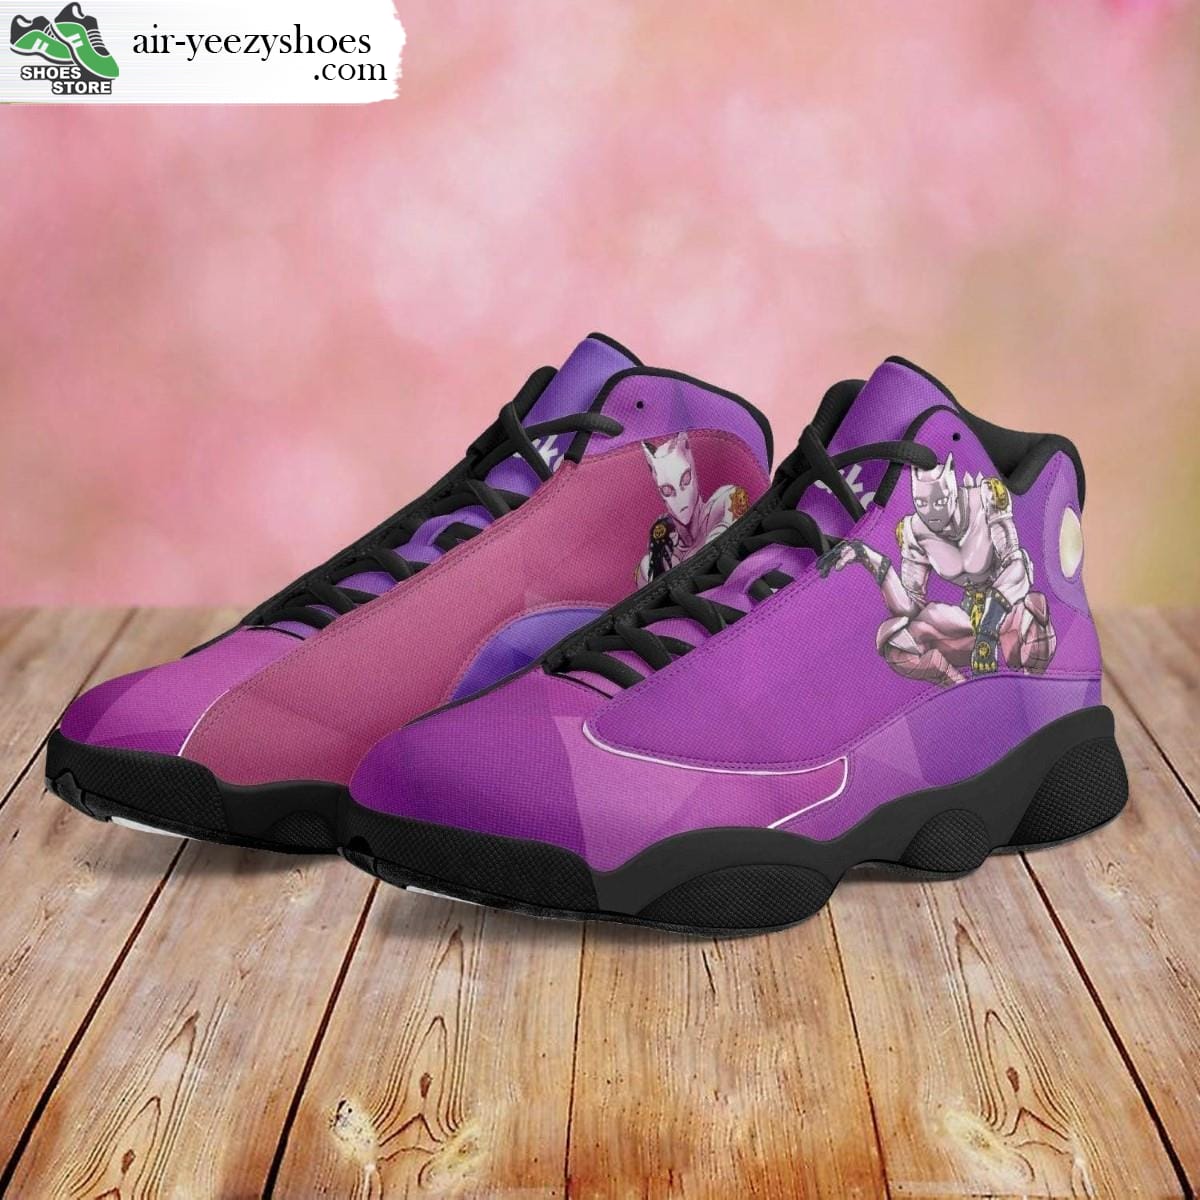 Kira Killer Queen Jordan 13 Shoes, JoJo's Bizarre Adventure Gift for Fan